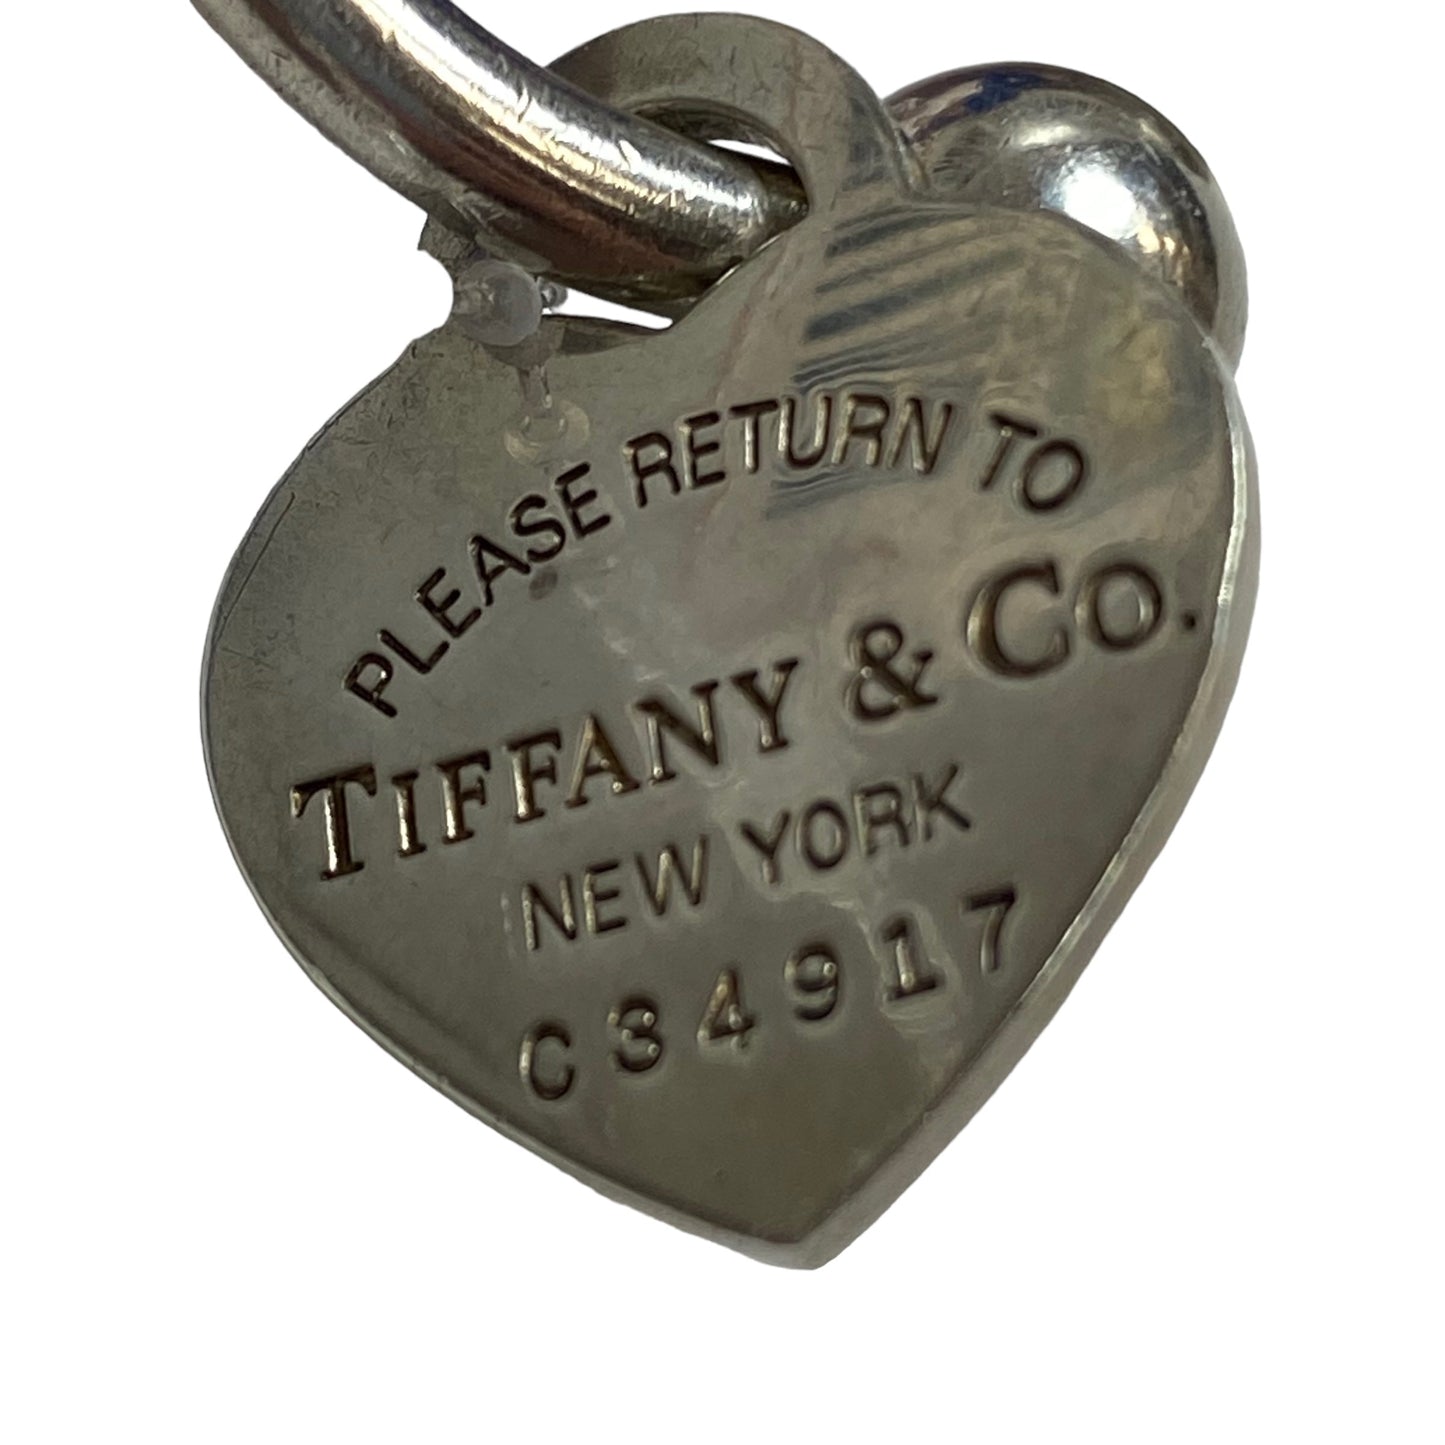 Key Chain Luxury Designer By Tiffany And Company